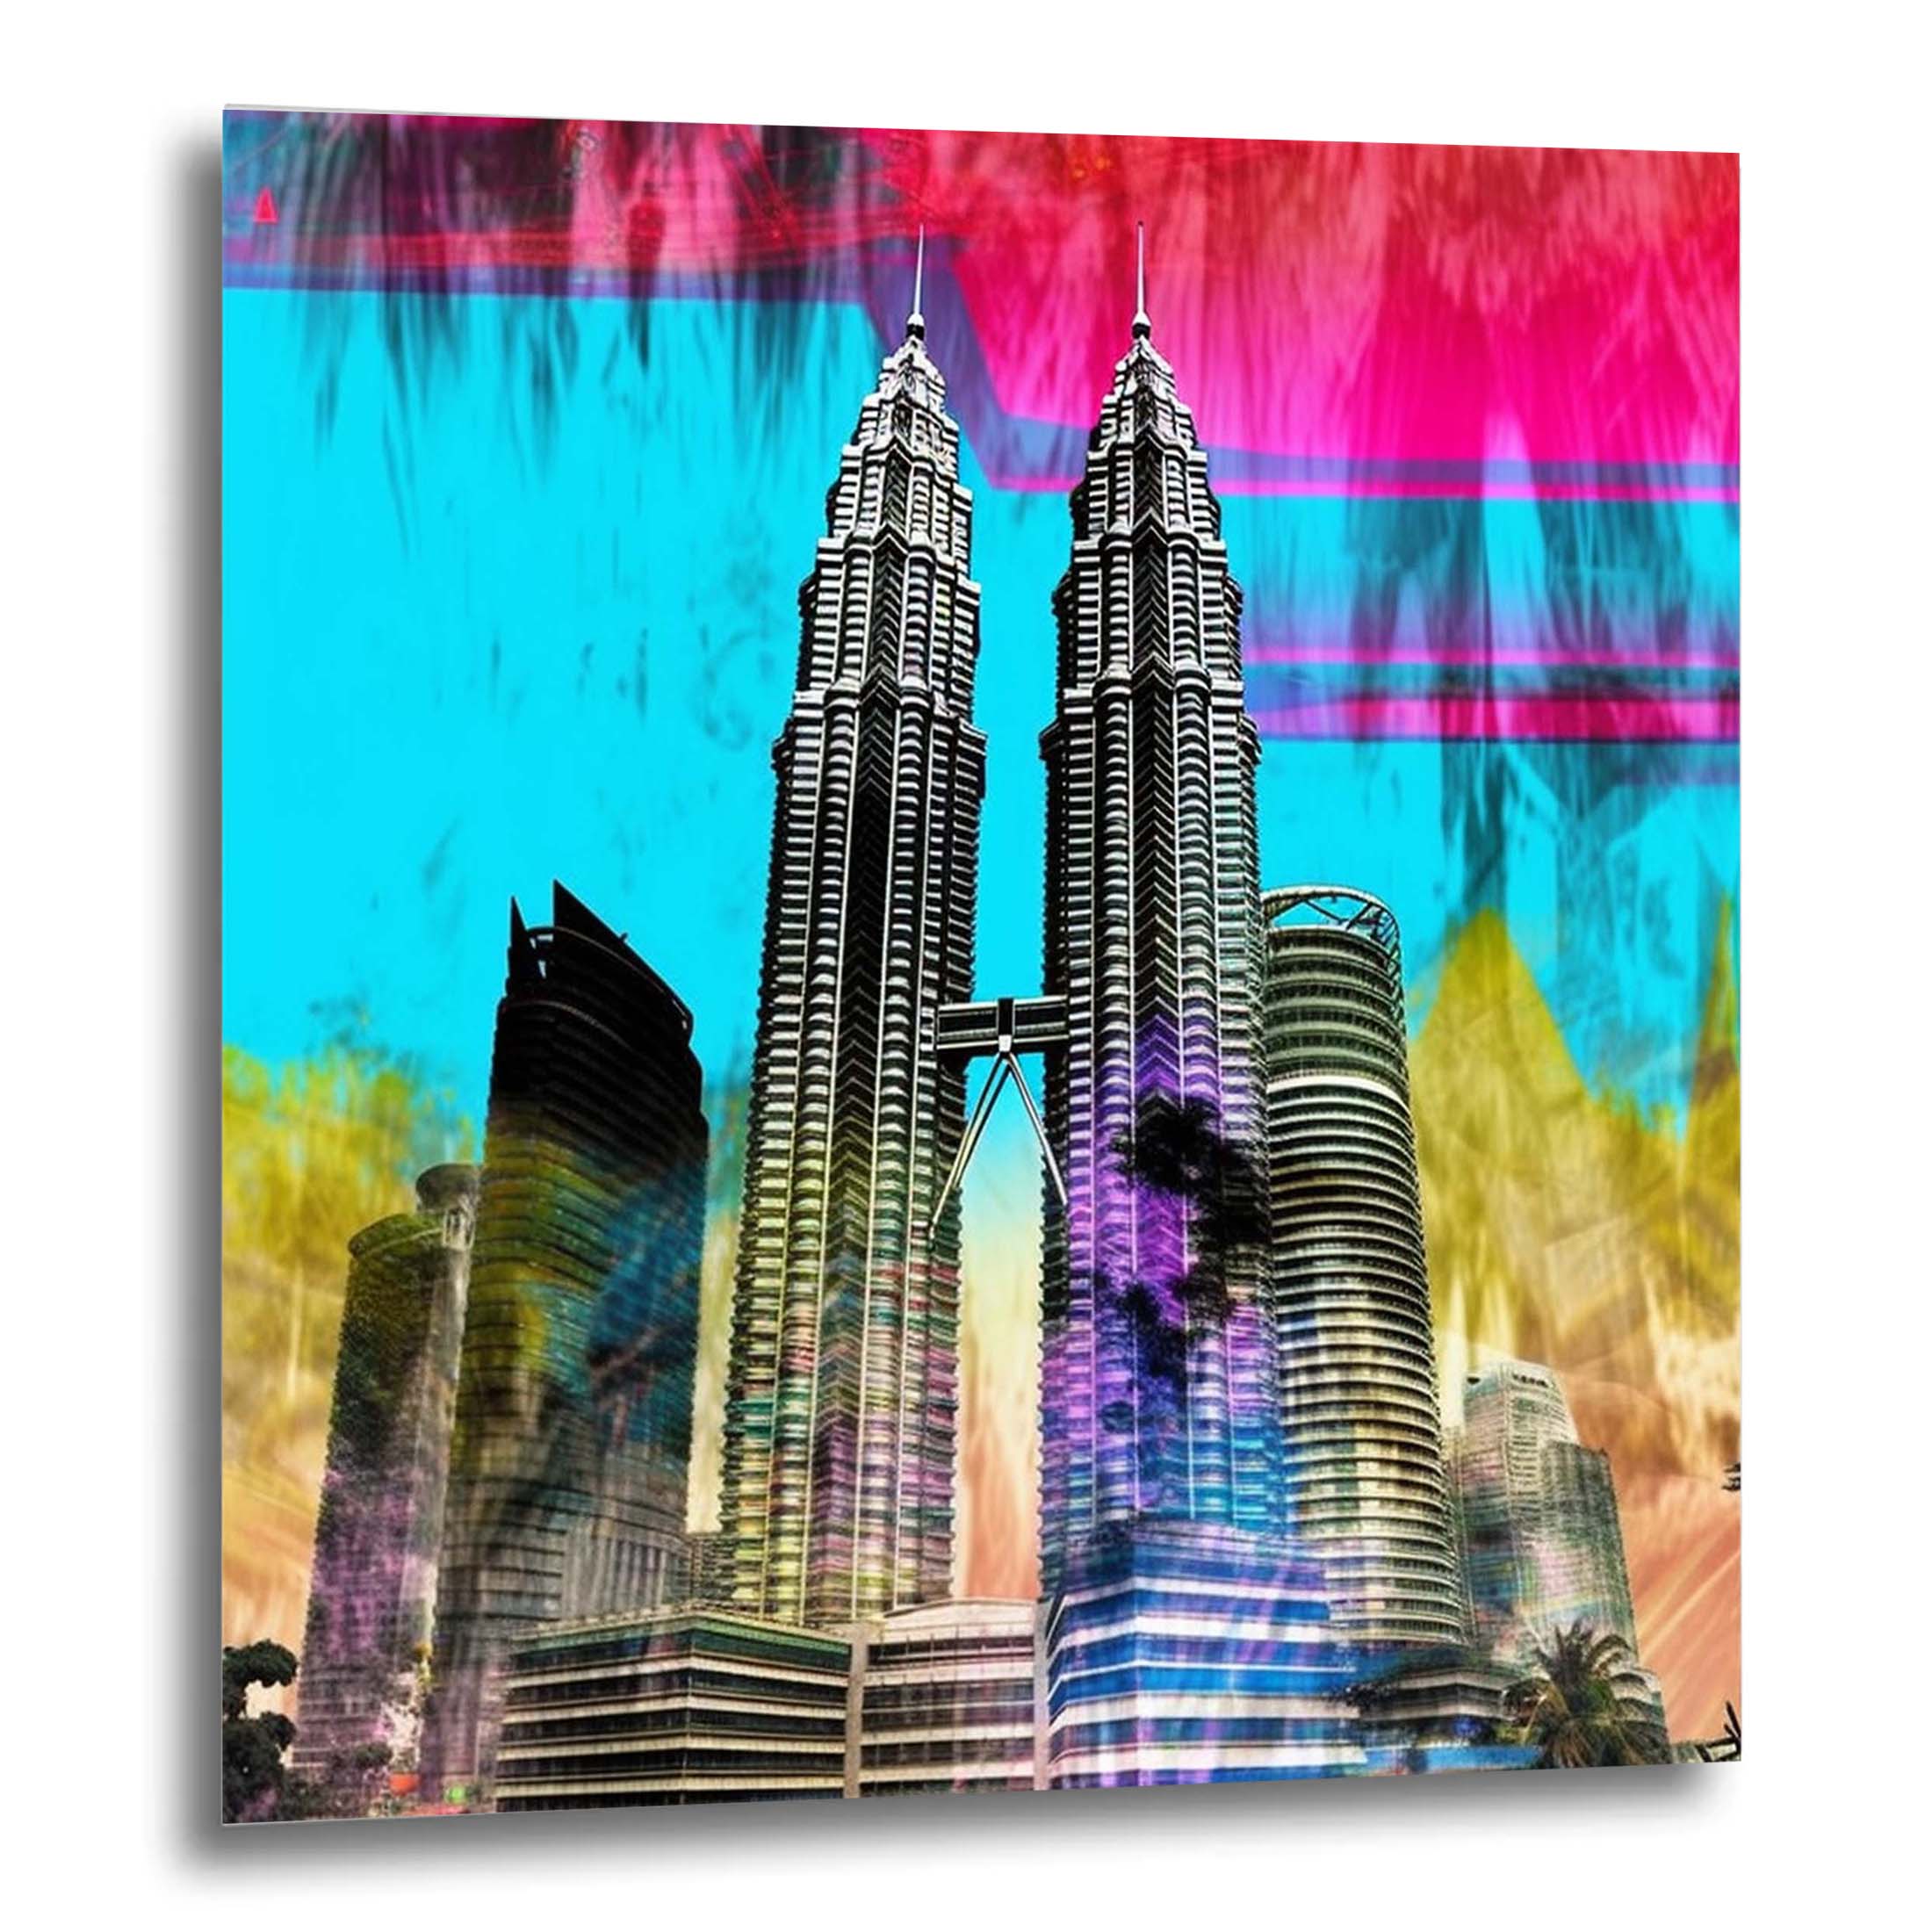 Petronas Towers Kuala Lumpur - - in art style Welt. mural Urbanisto Deine - Liebe urbanisto pop –